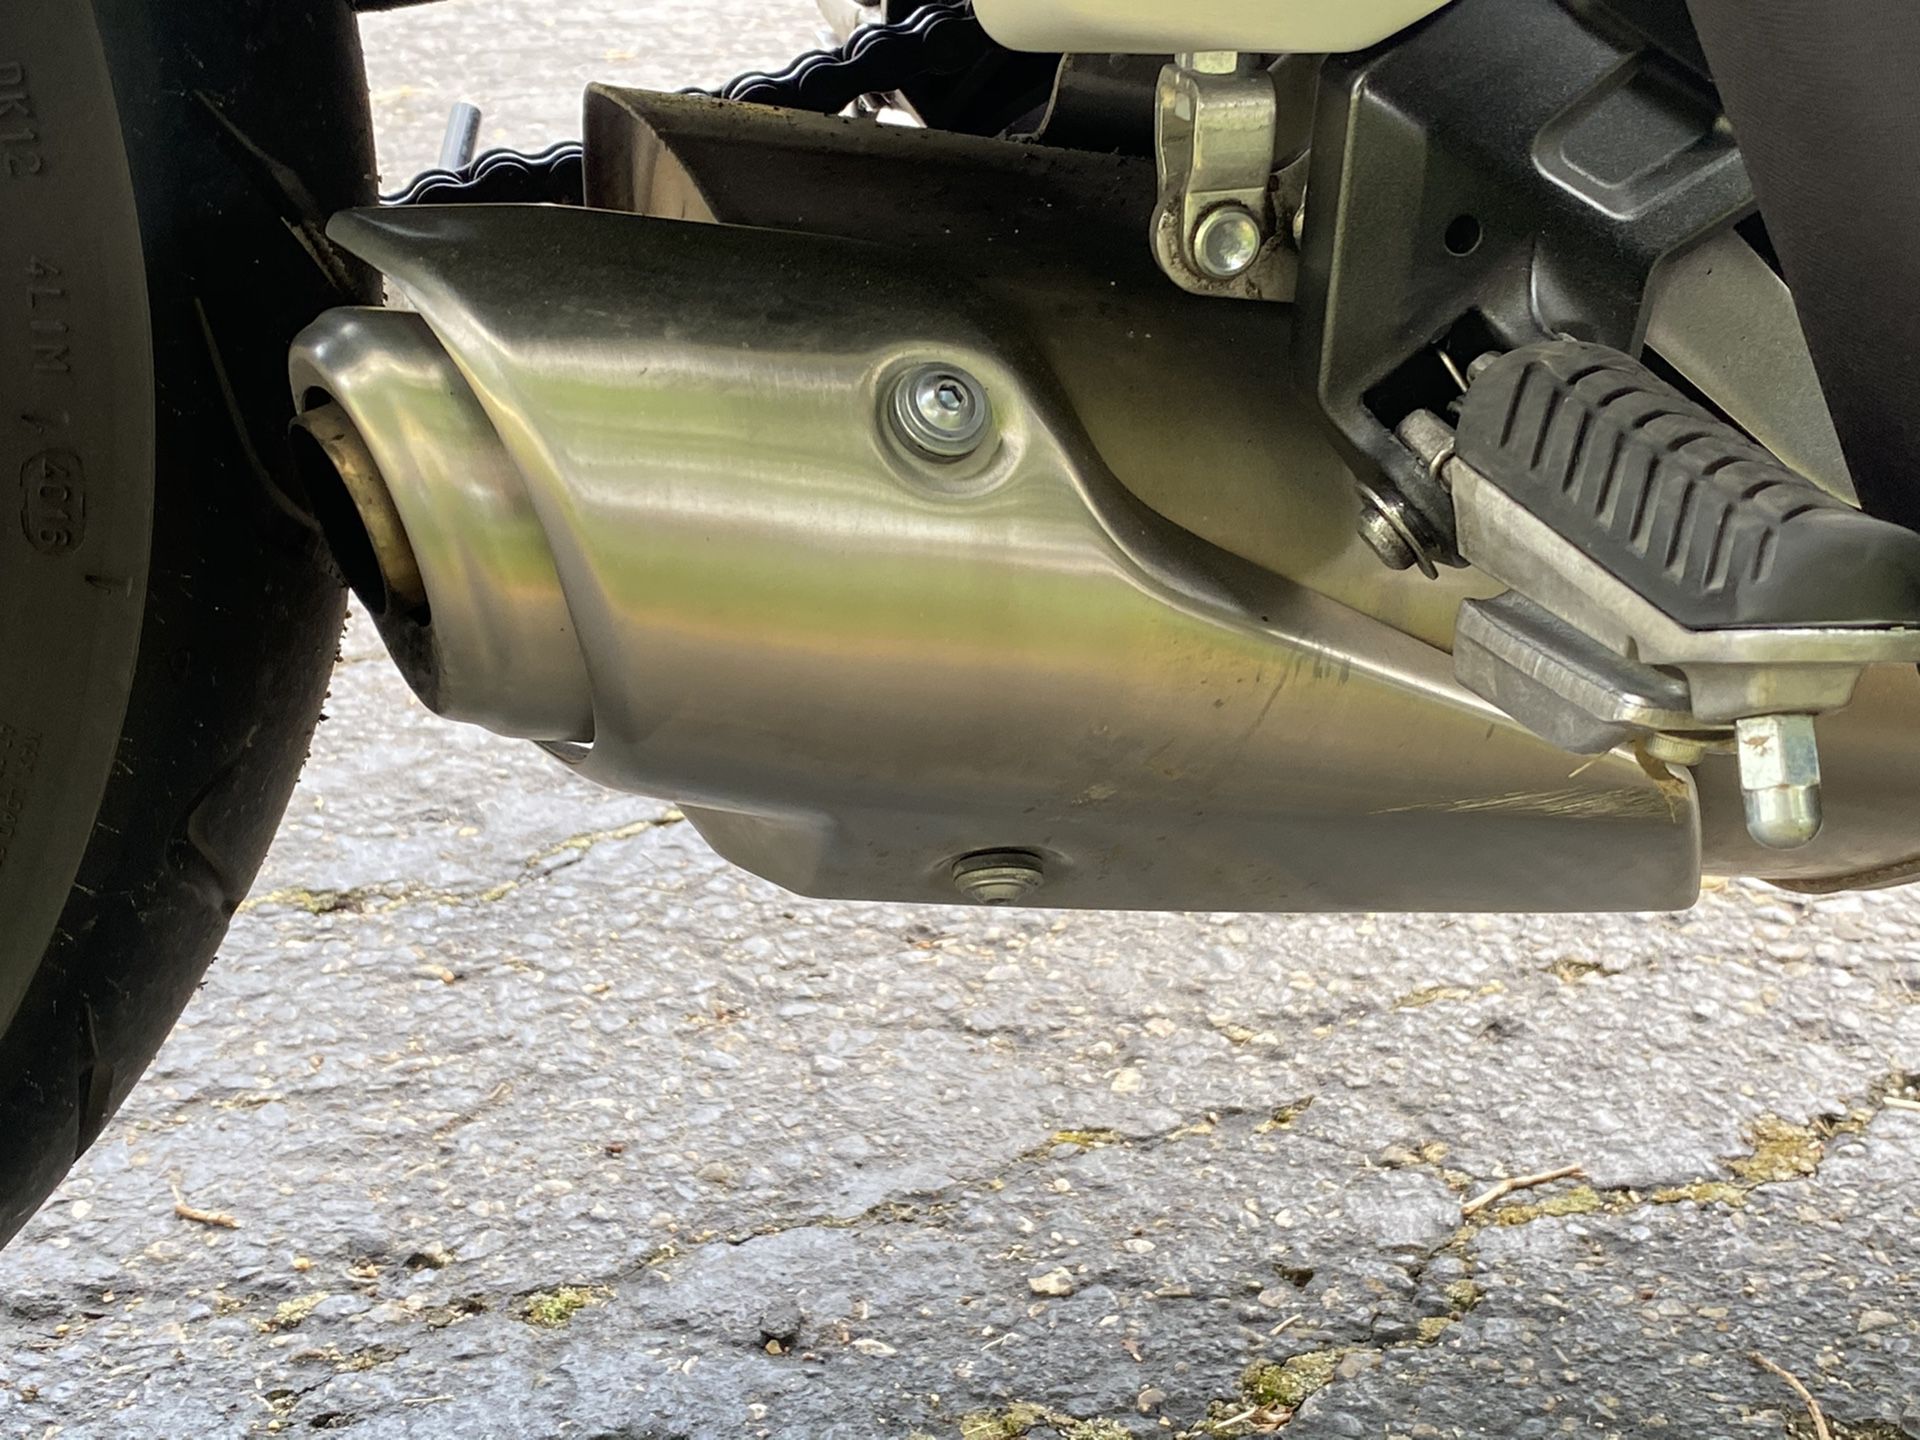 Motorcycle exhaust system for a Kawasaki Ninja 650